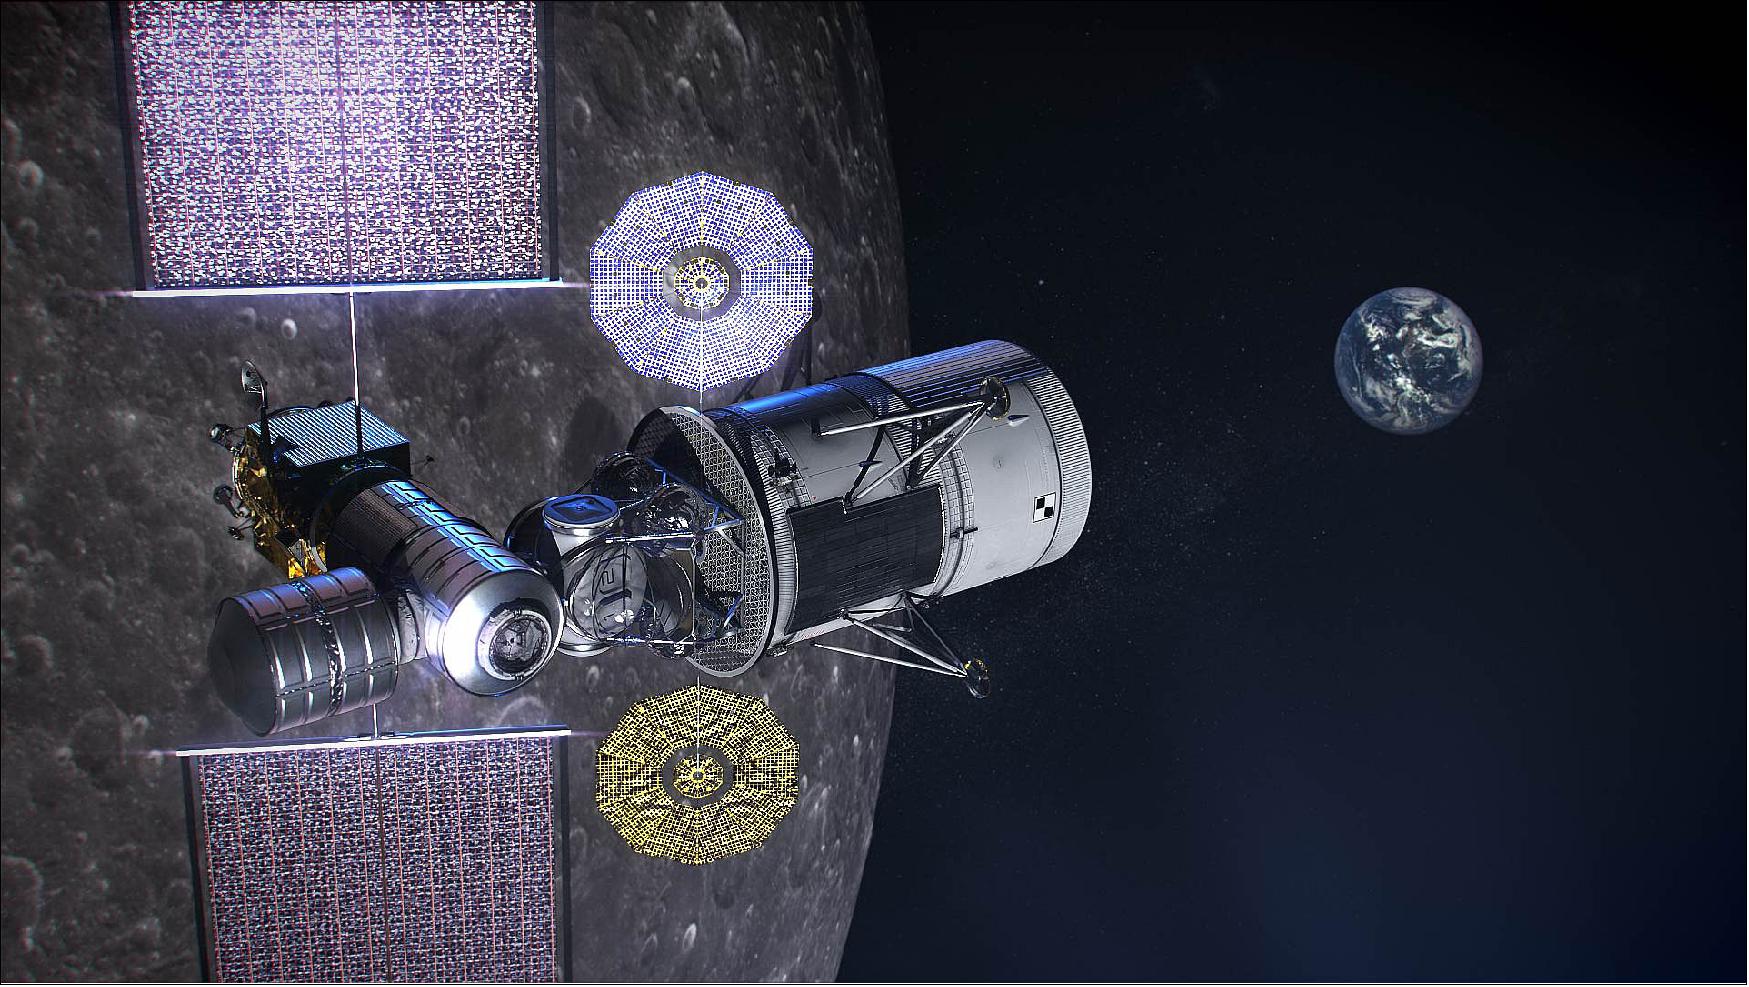 Figure 19: Illustration of NASA's lunar-orbiting Gateway and a human landing system in orbit around the Moon (image credit: NASA)